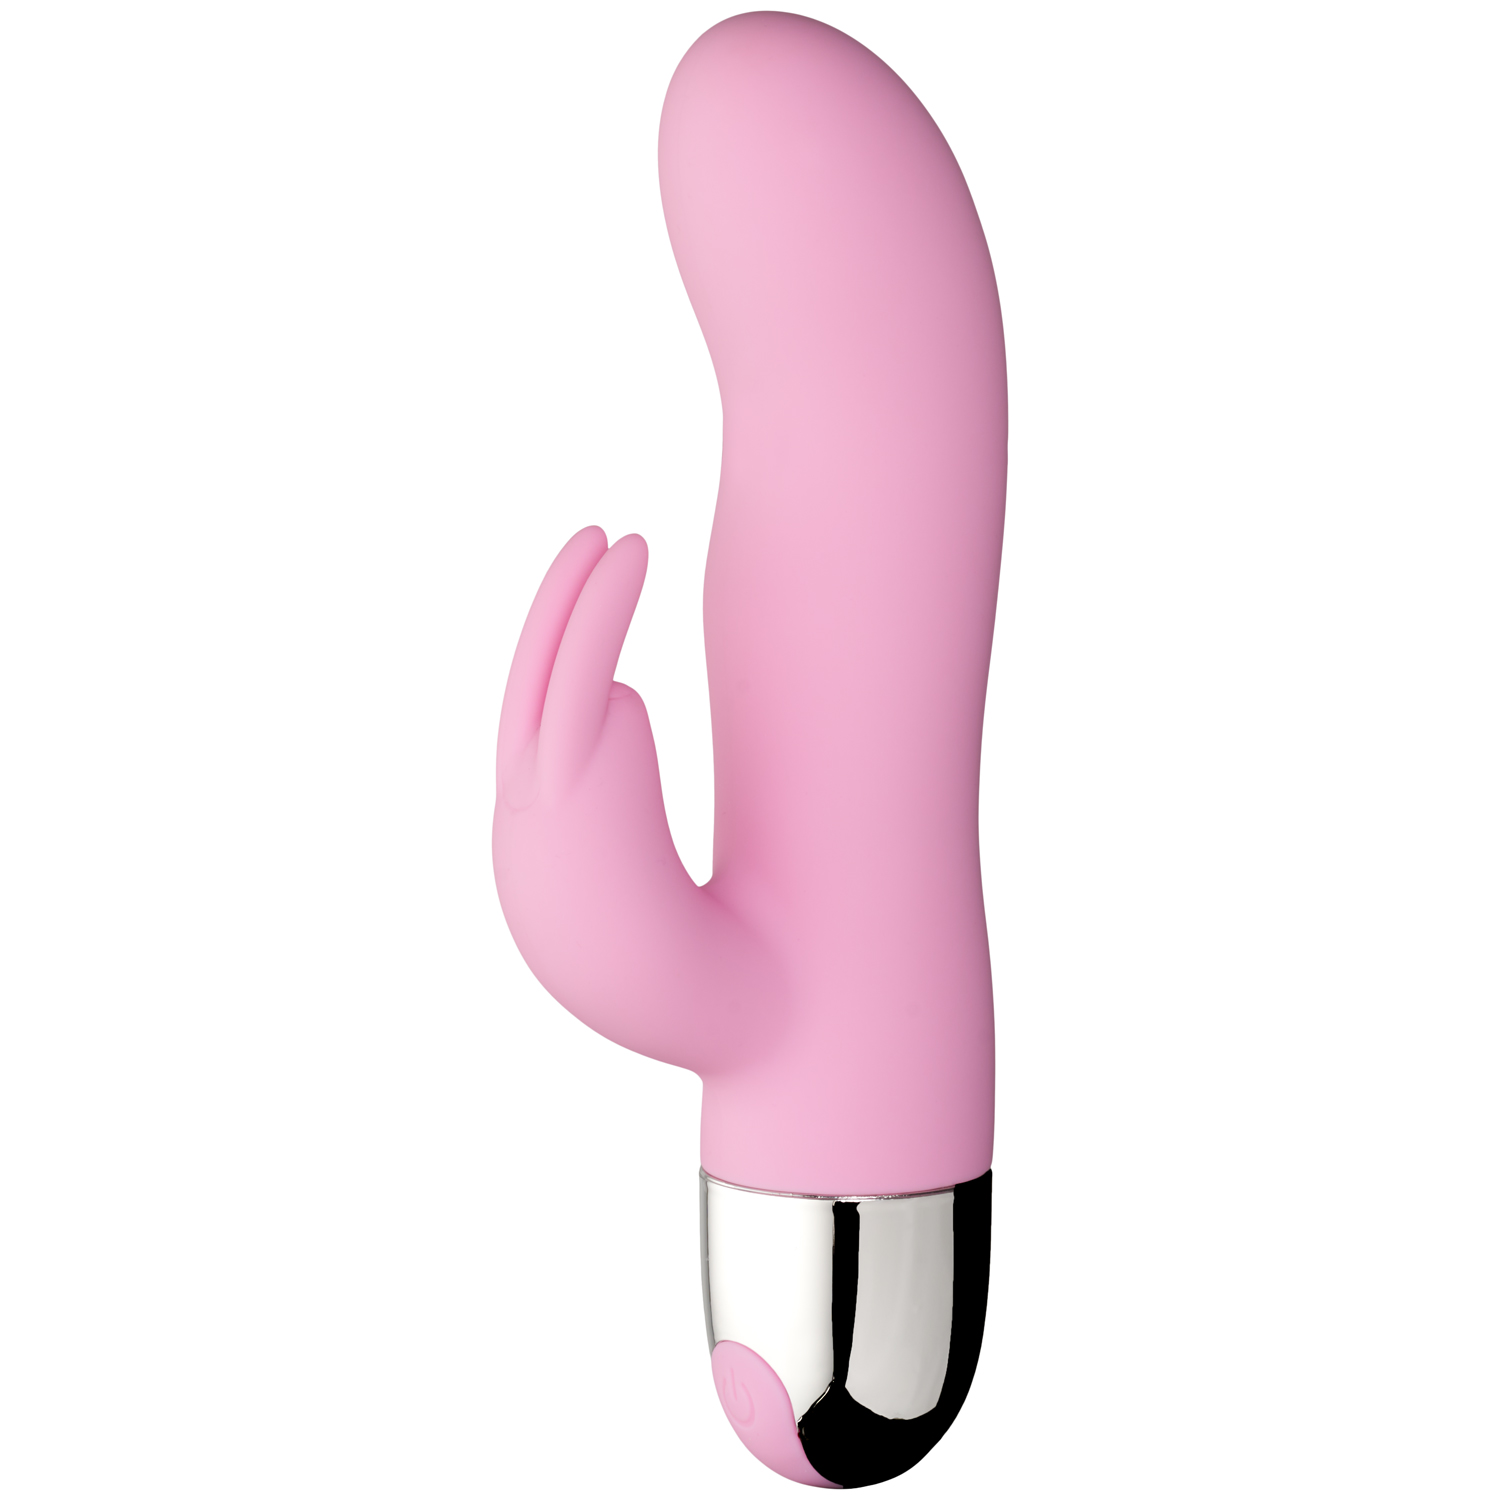 Sinful Playful Pink Bunny G Opladelig Rabbit Vibrator - Pink